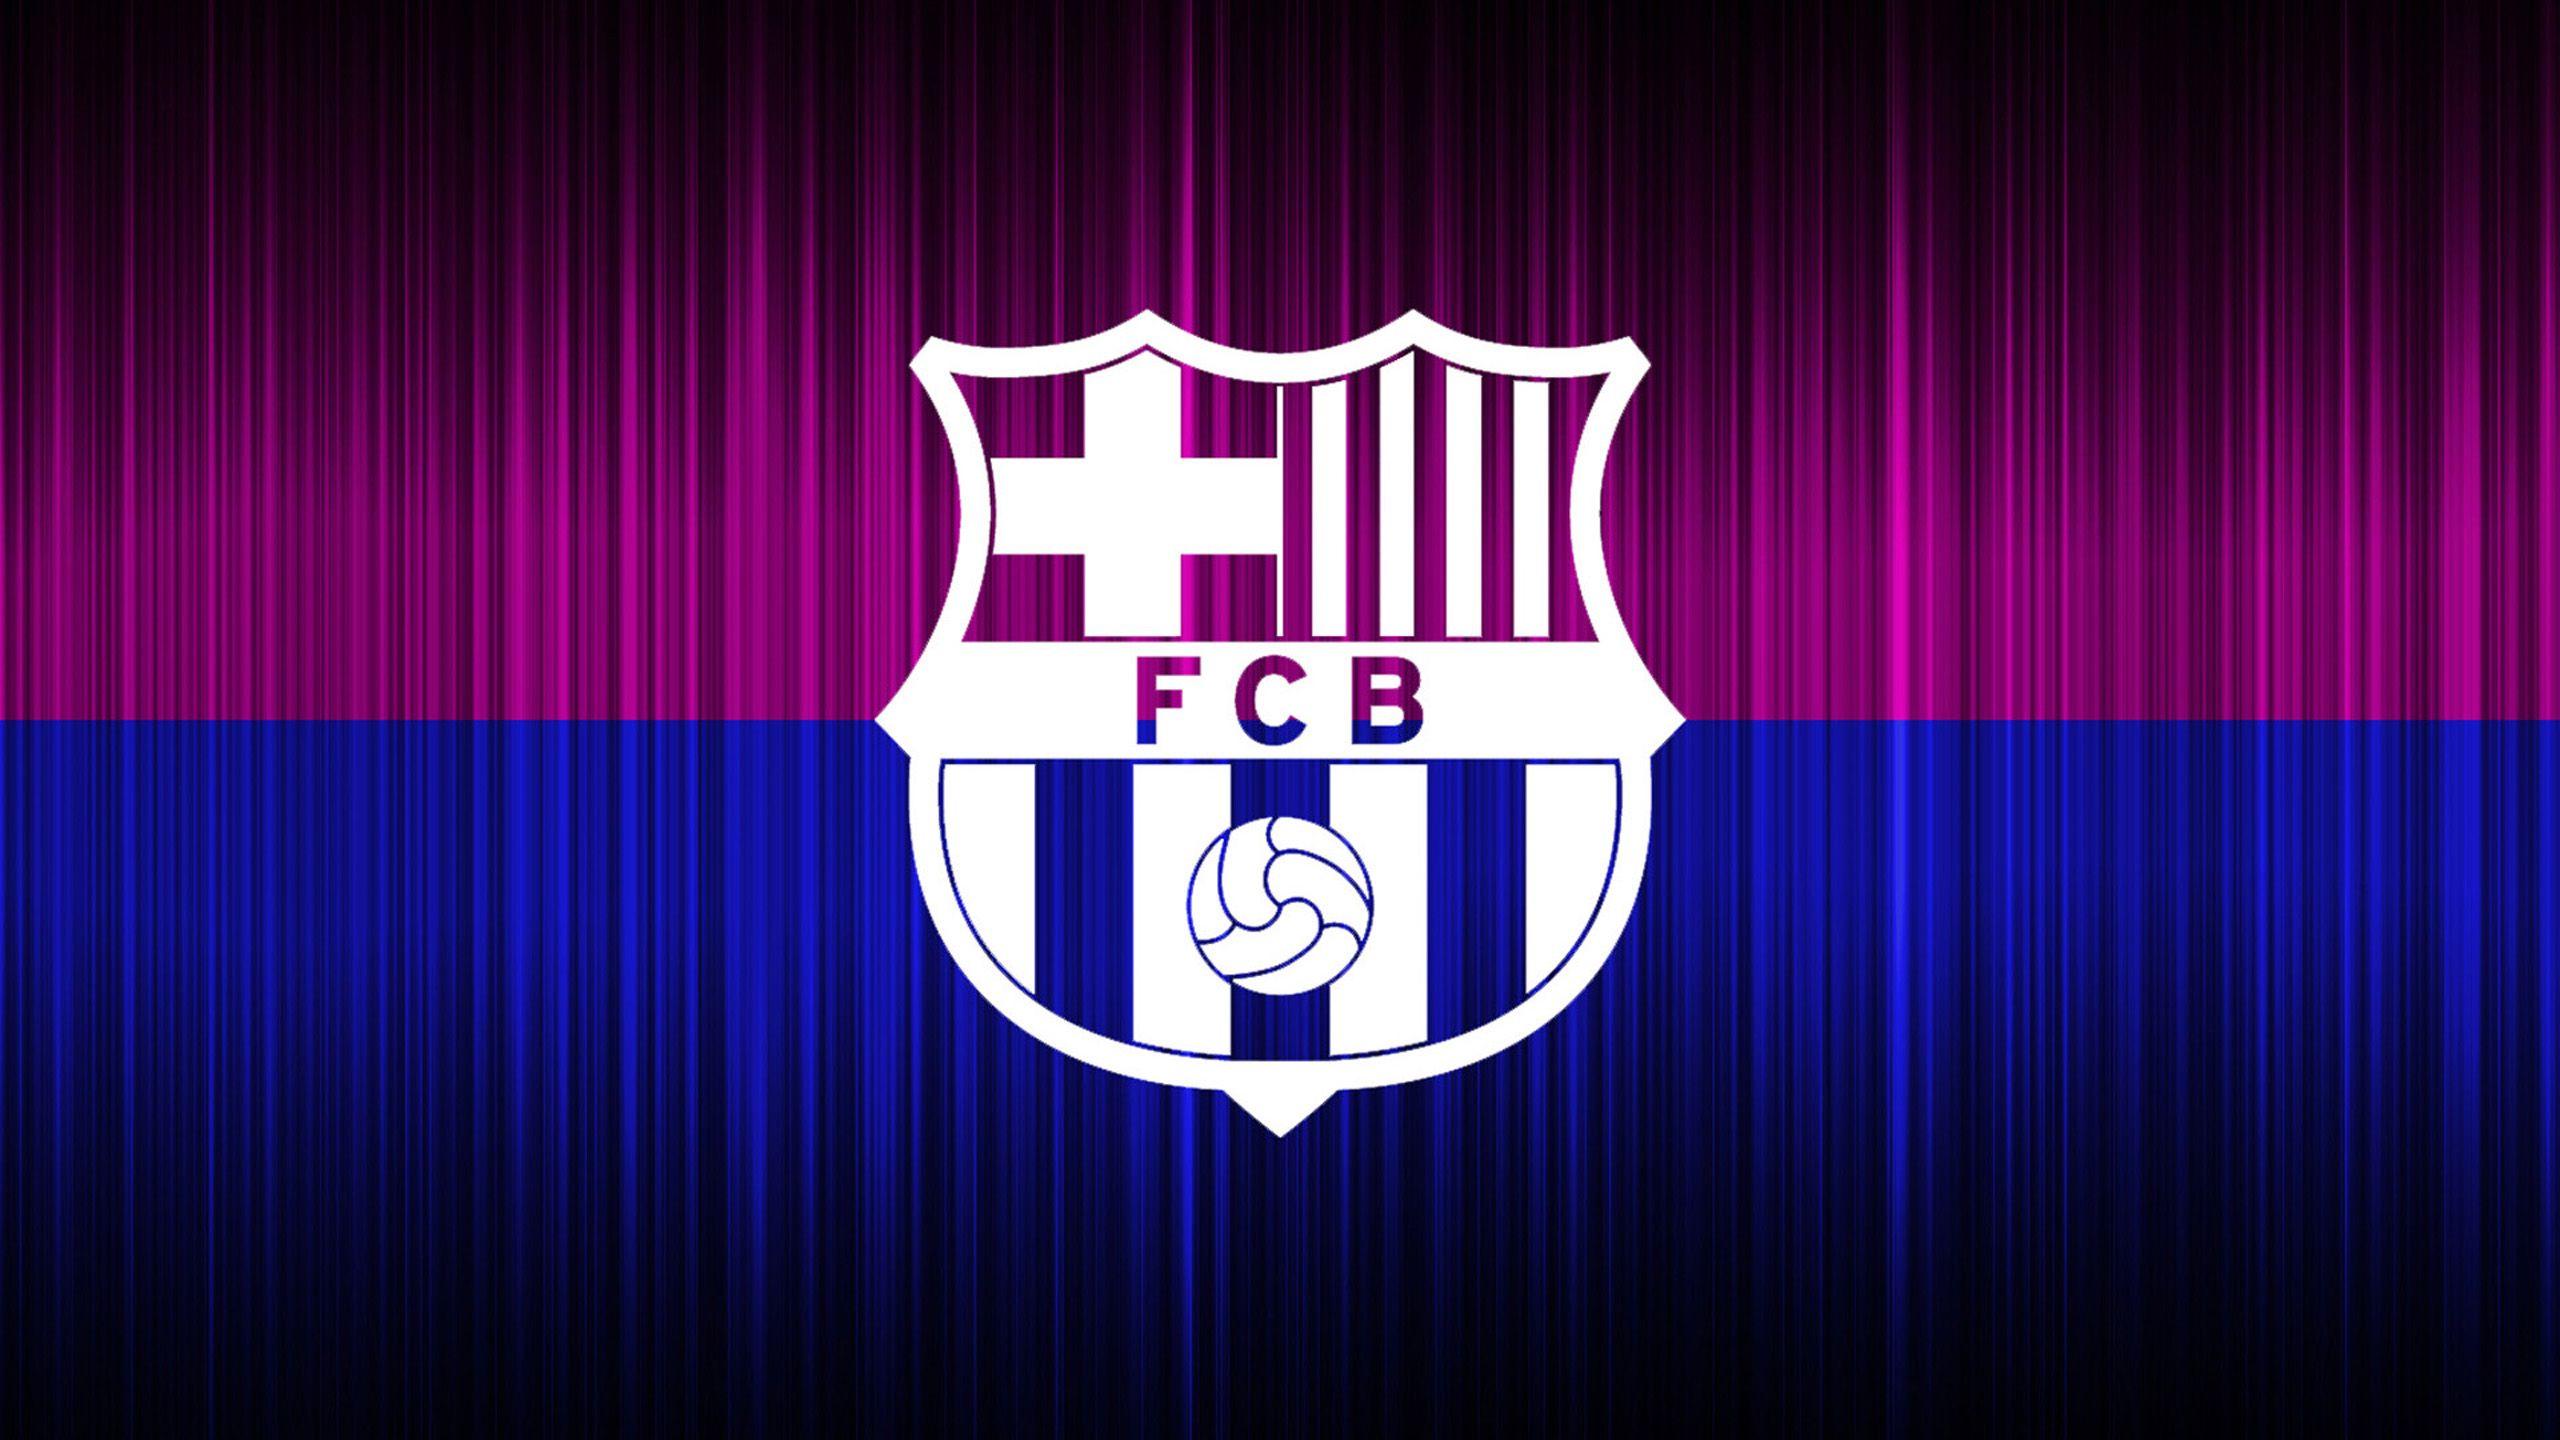 FCB Logo - FCB Wallpapers HD Free Download | PixelsTalk.Net